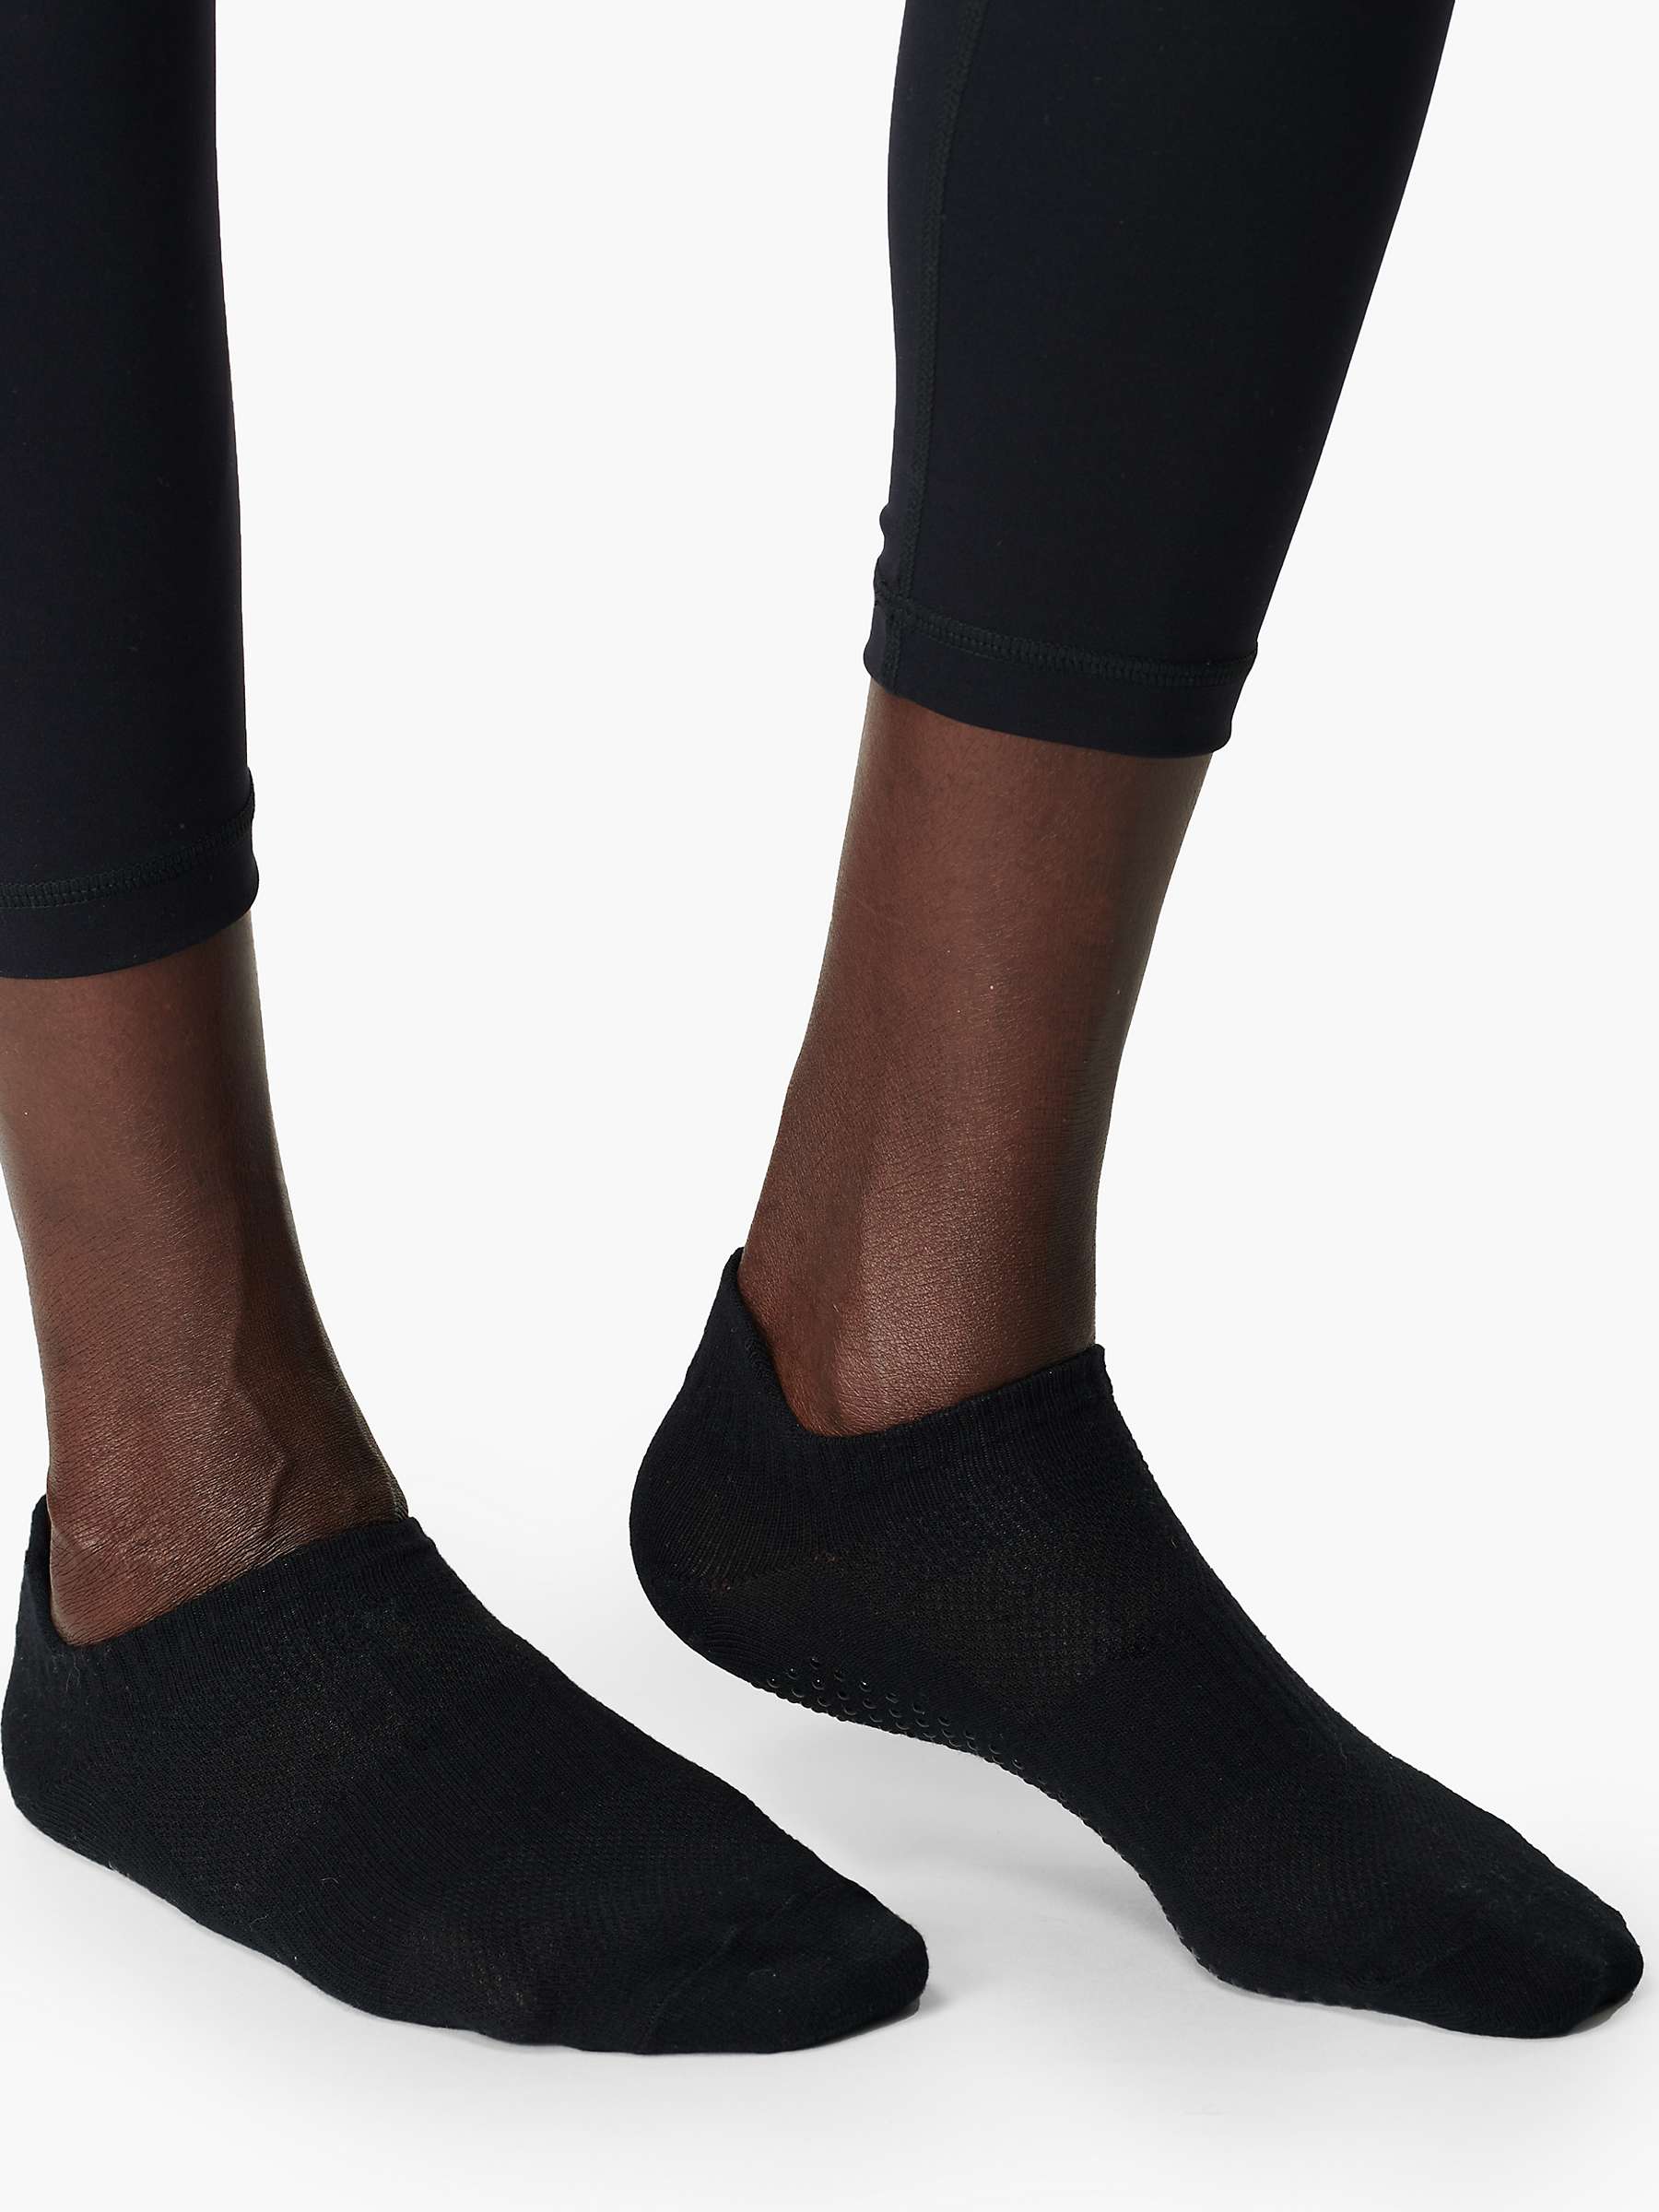 Buy Sweaty Betty Gripper Cotton Socks, Pack of 2 Online at johnlewis.com